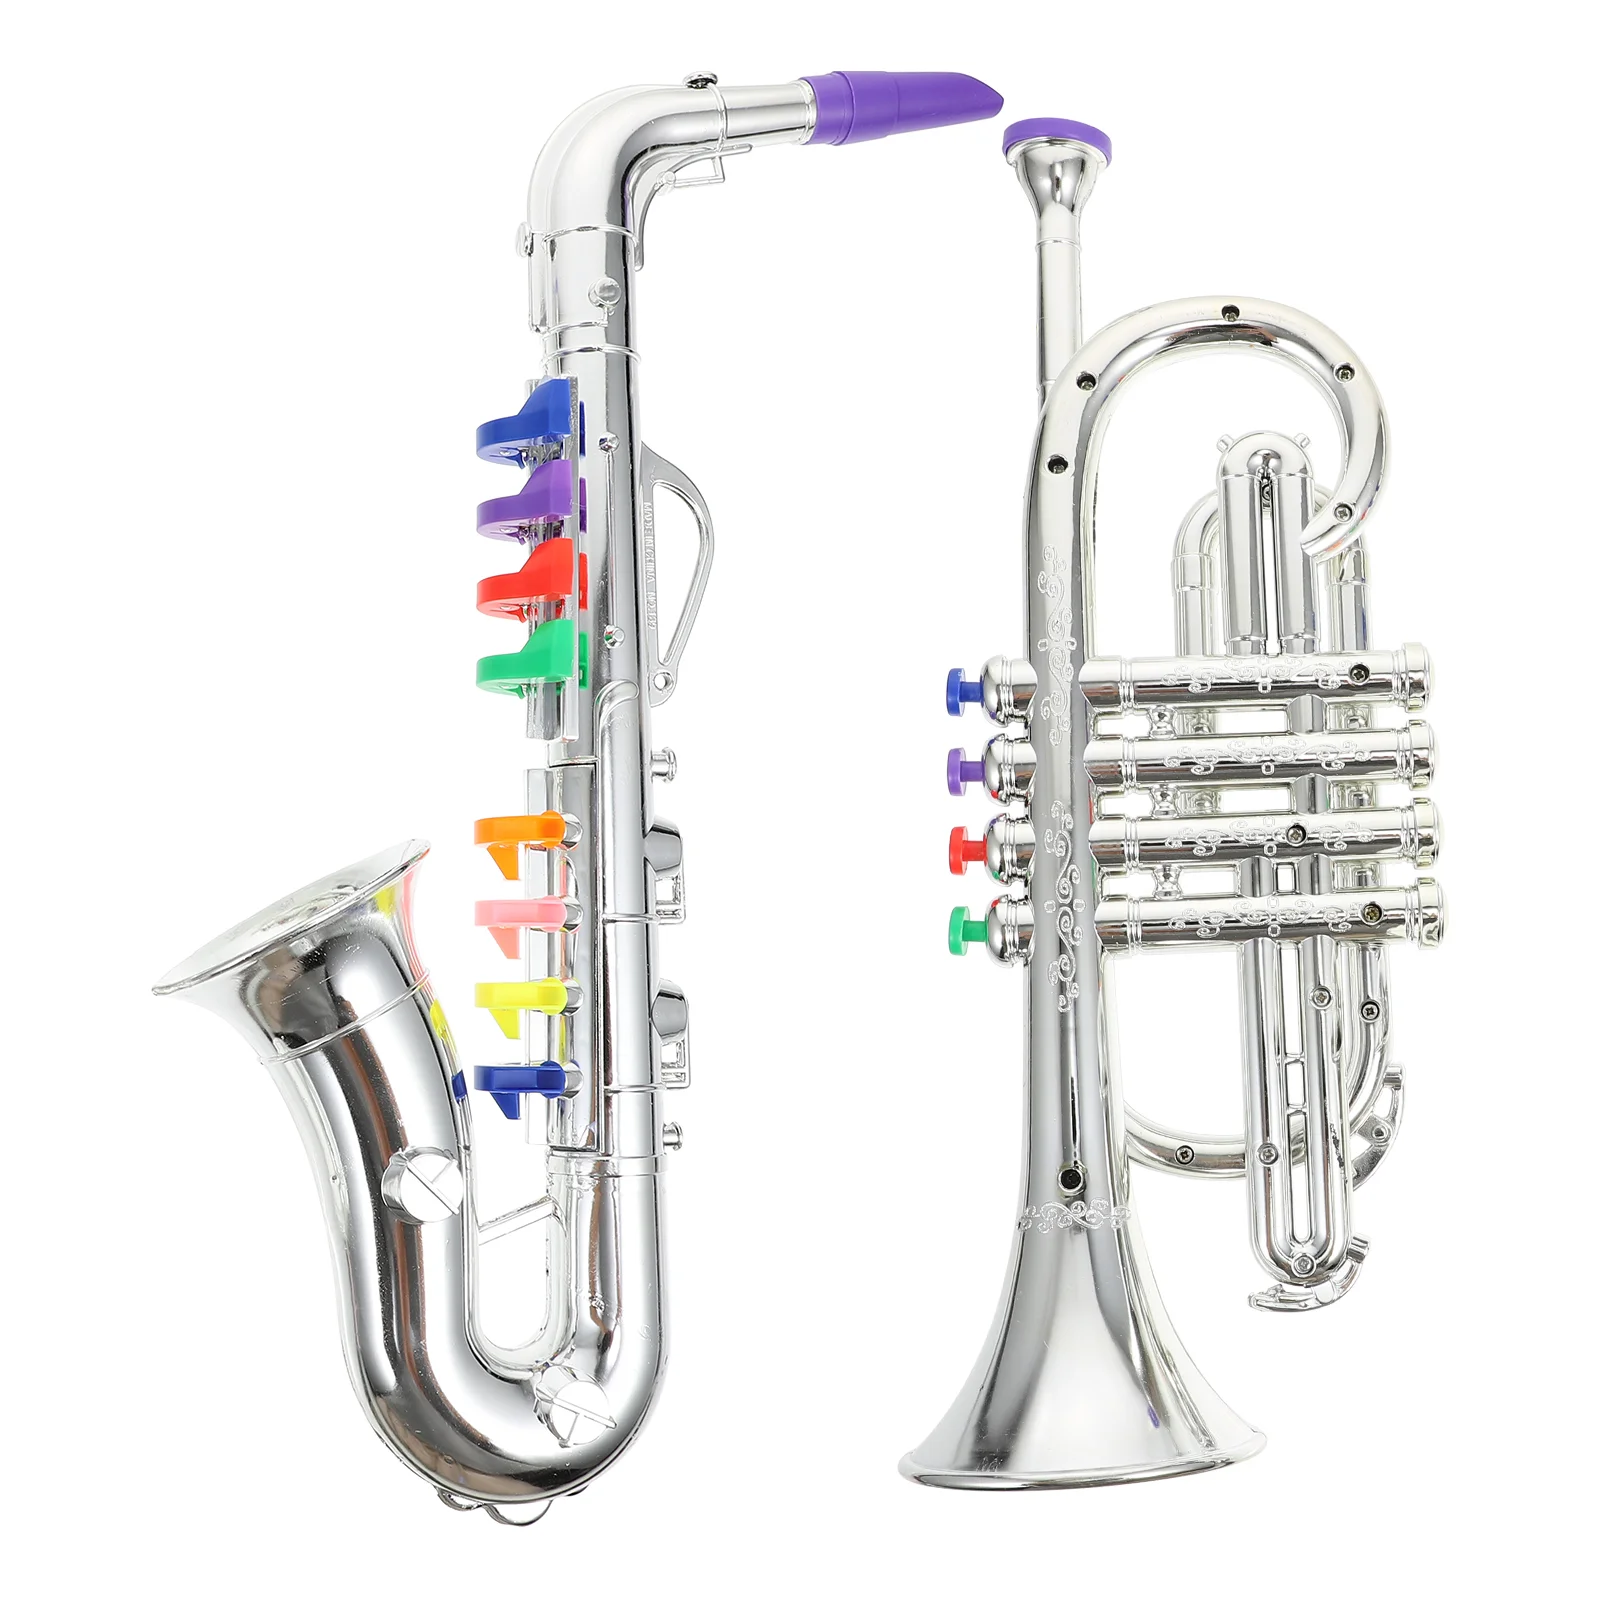 

2 Pcs Simulated Musical Instrument Model Mini Instruments Imitation Kids Toddler Trumpet Plastic Metal